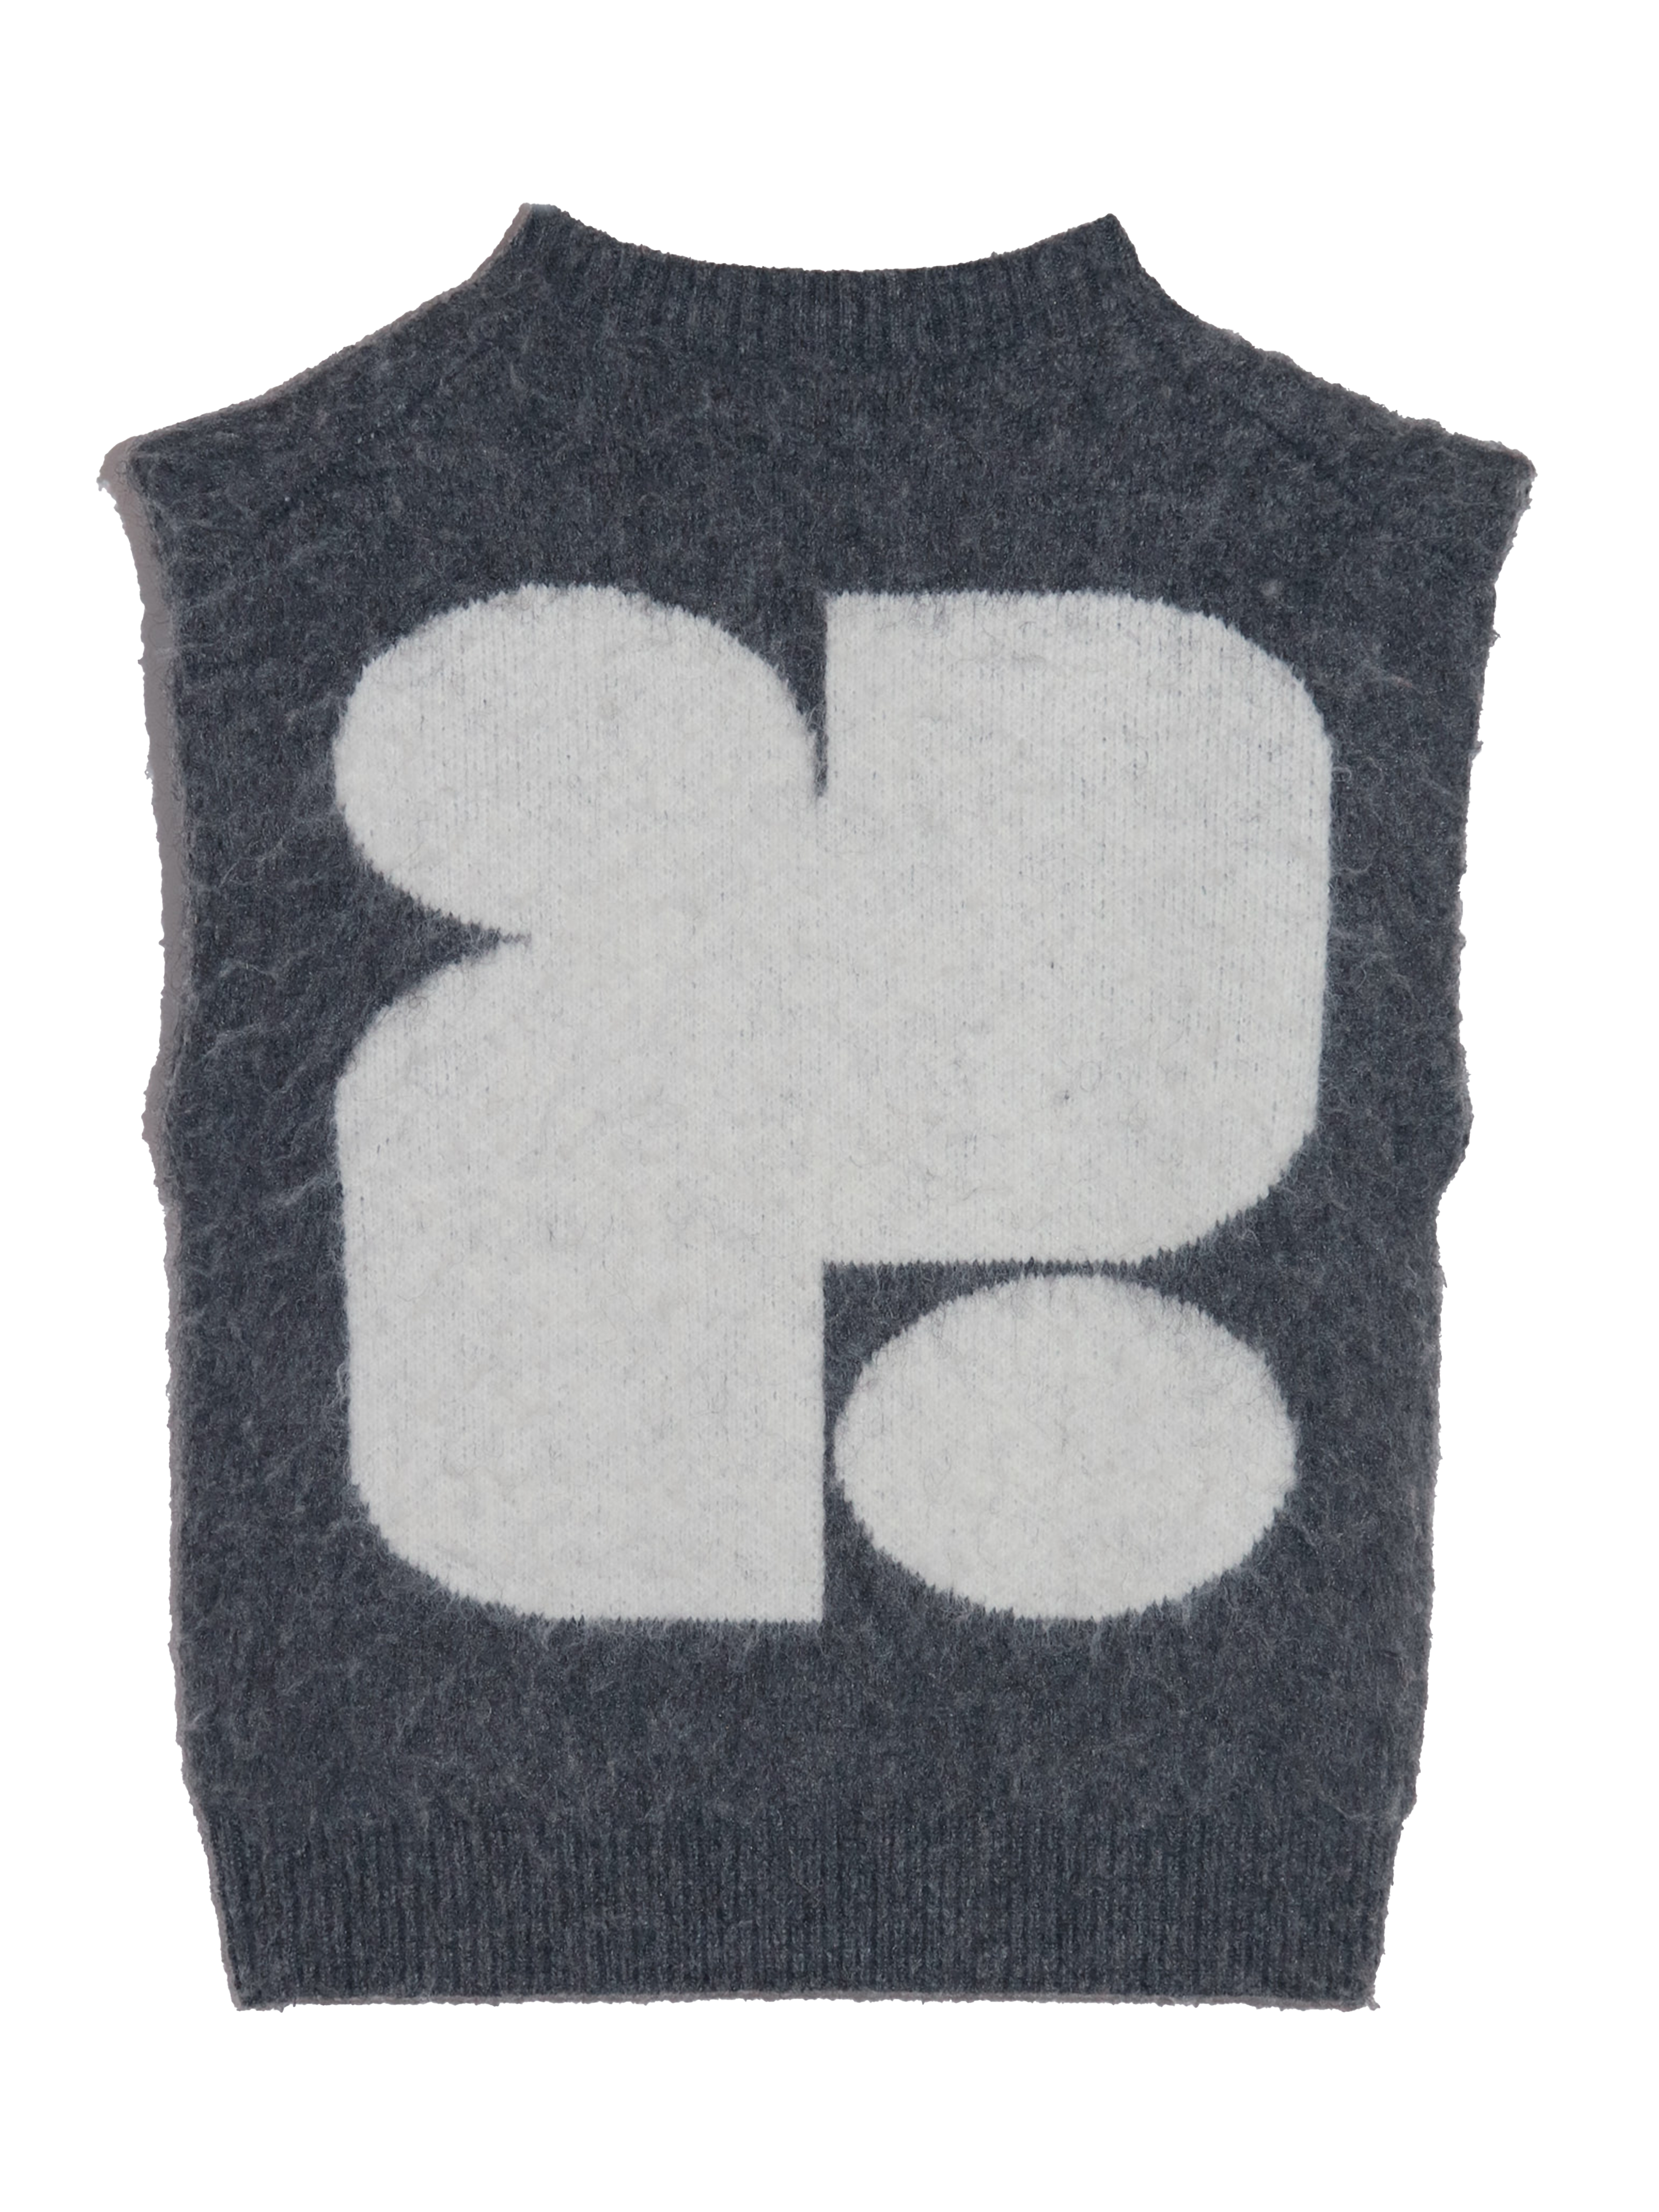 Bourse modern graphic vest